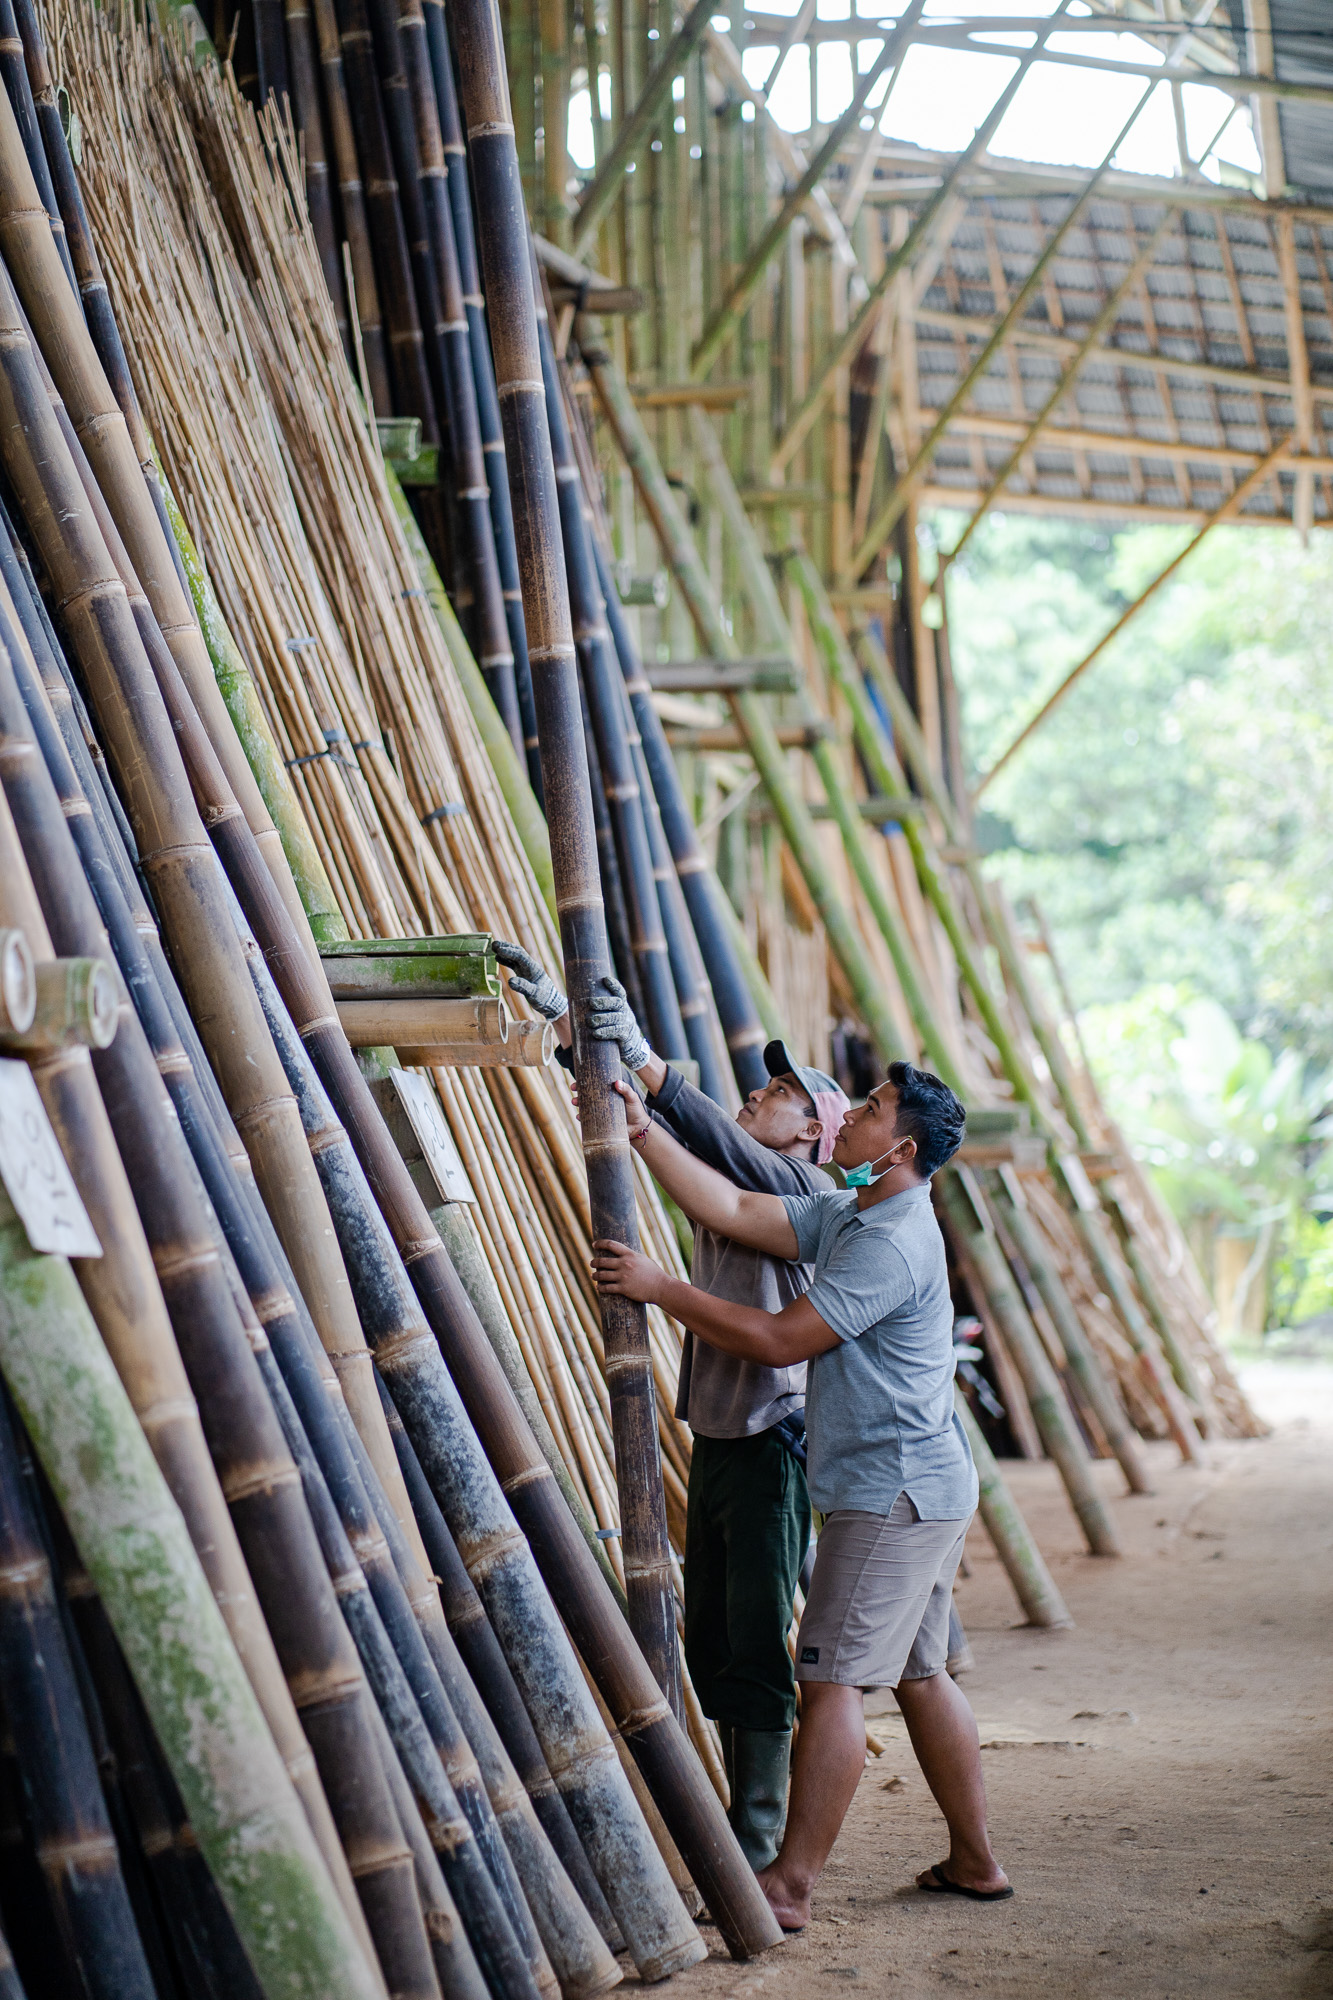 Bamboo Factory & Green Village Tour